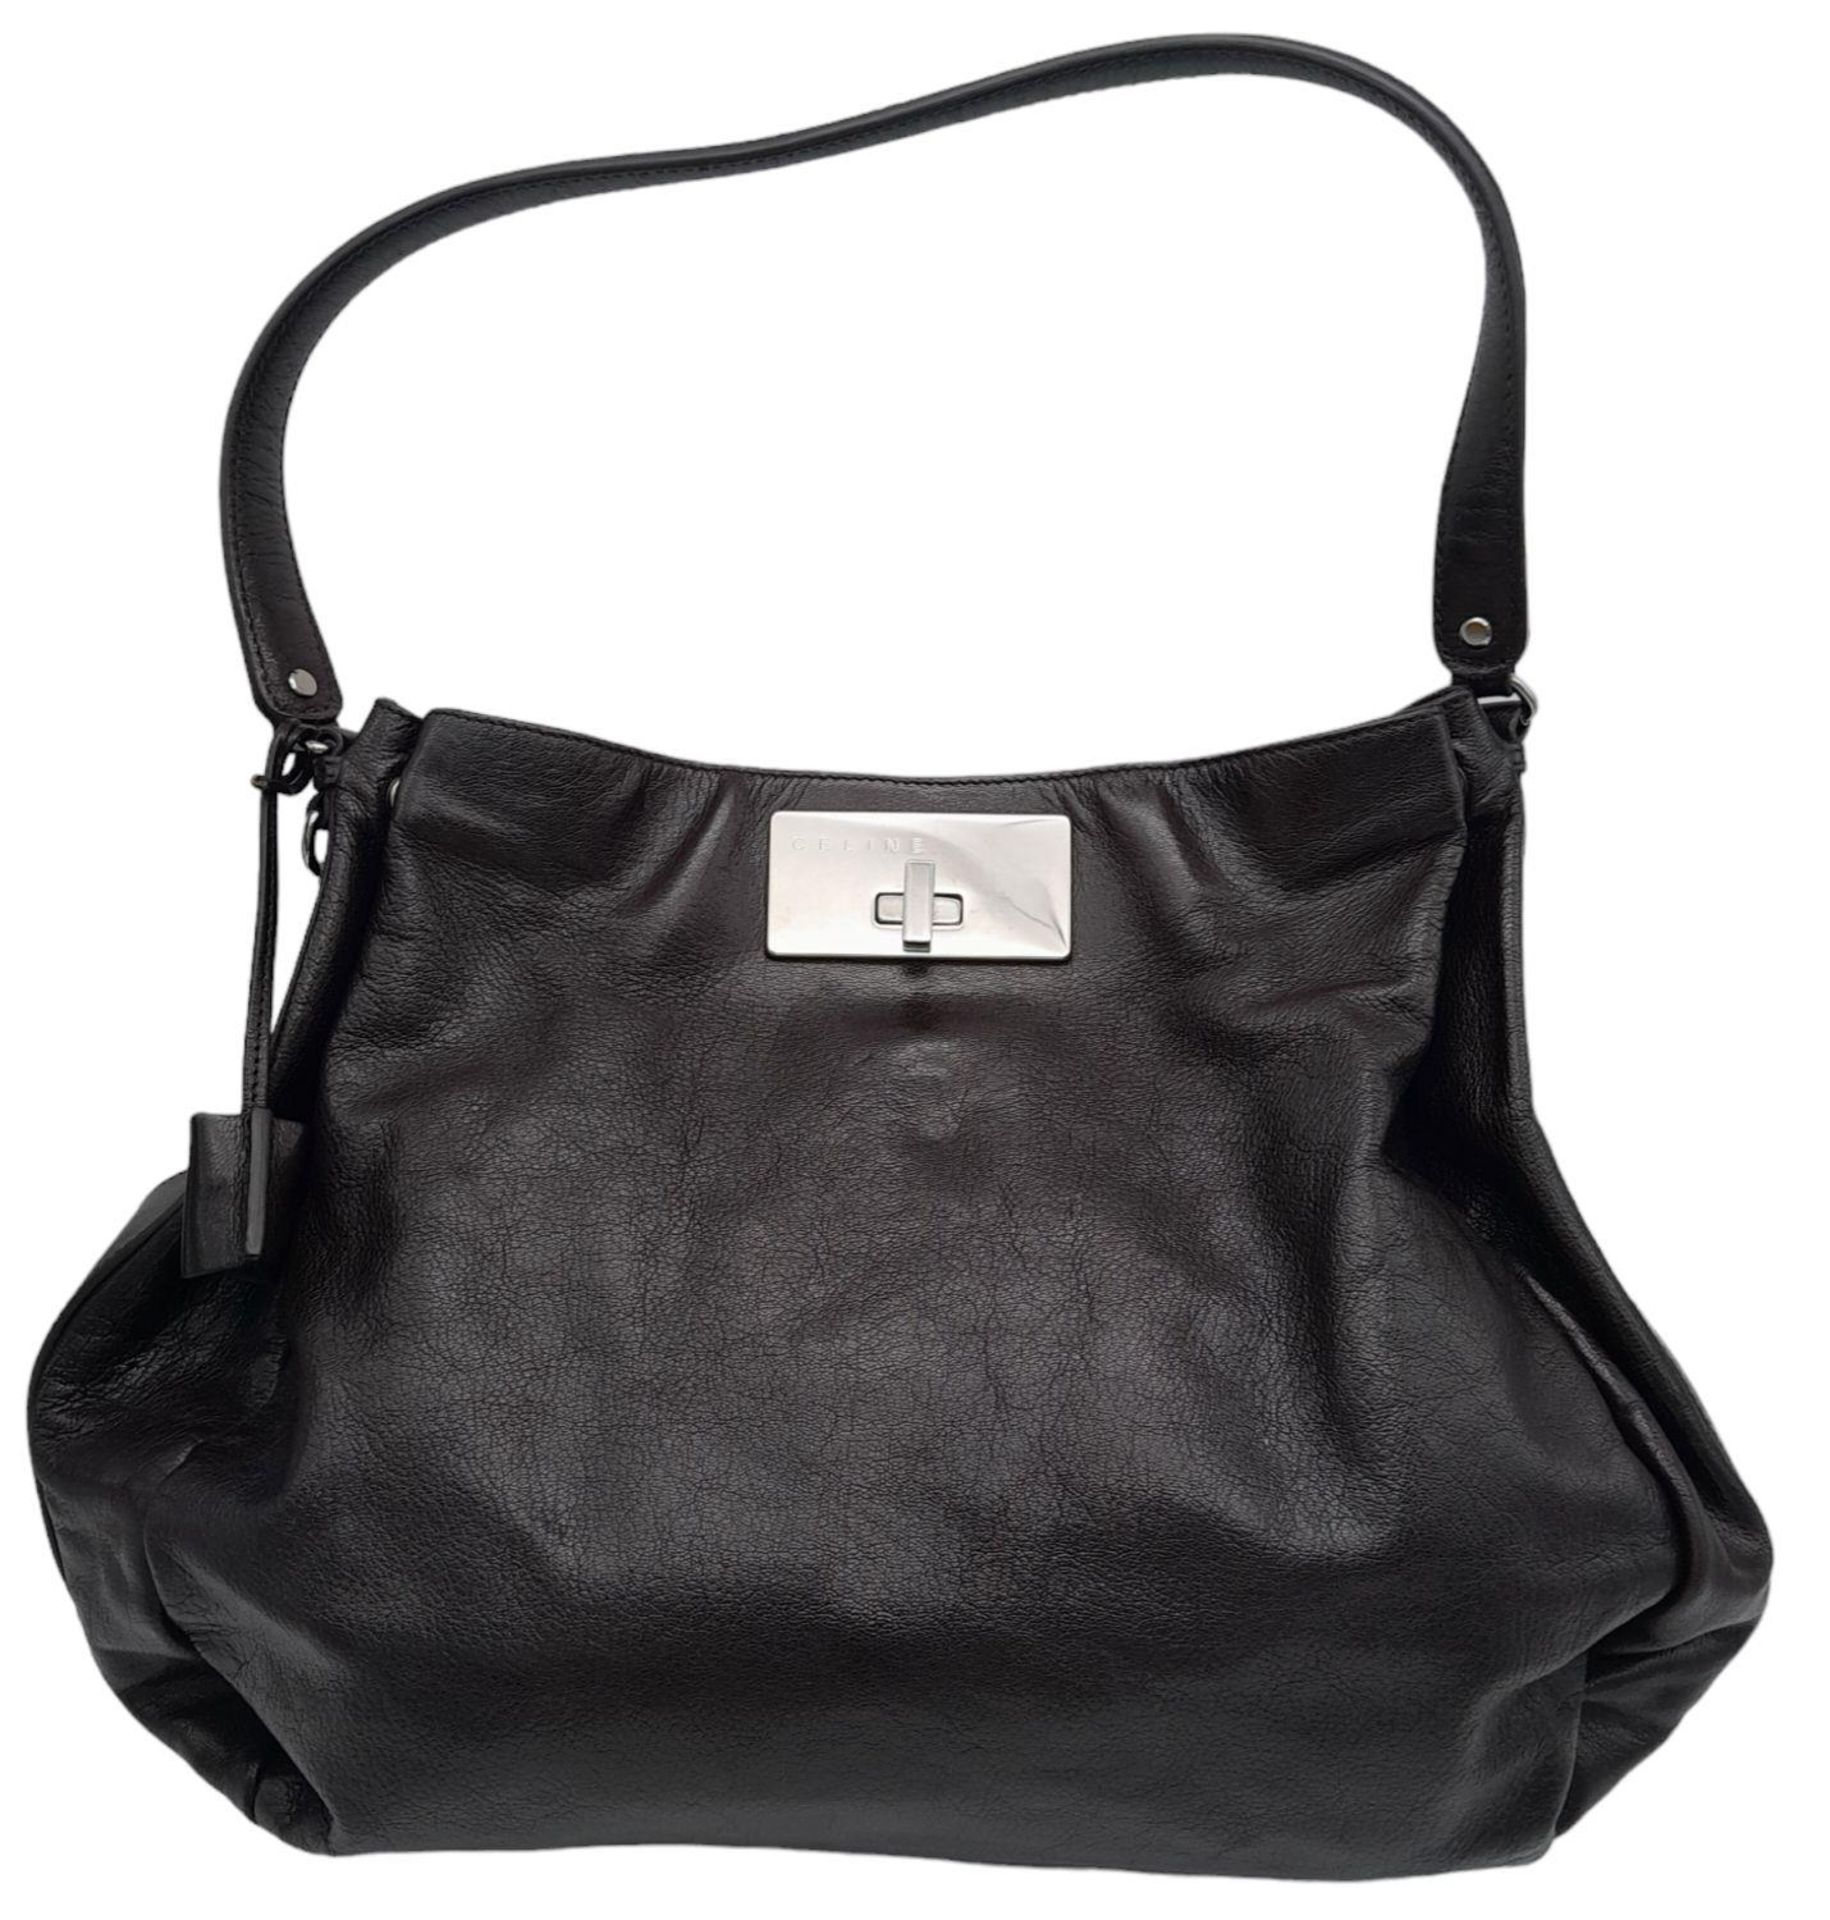 A Celine Dark Brown Shoulder Bag. Leather exterior with silver-toned hardware, single strap, press